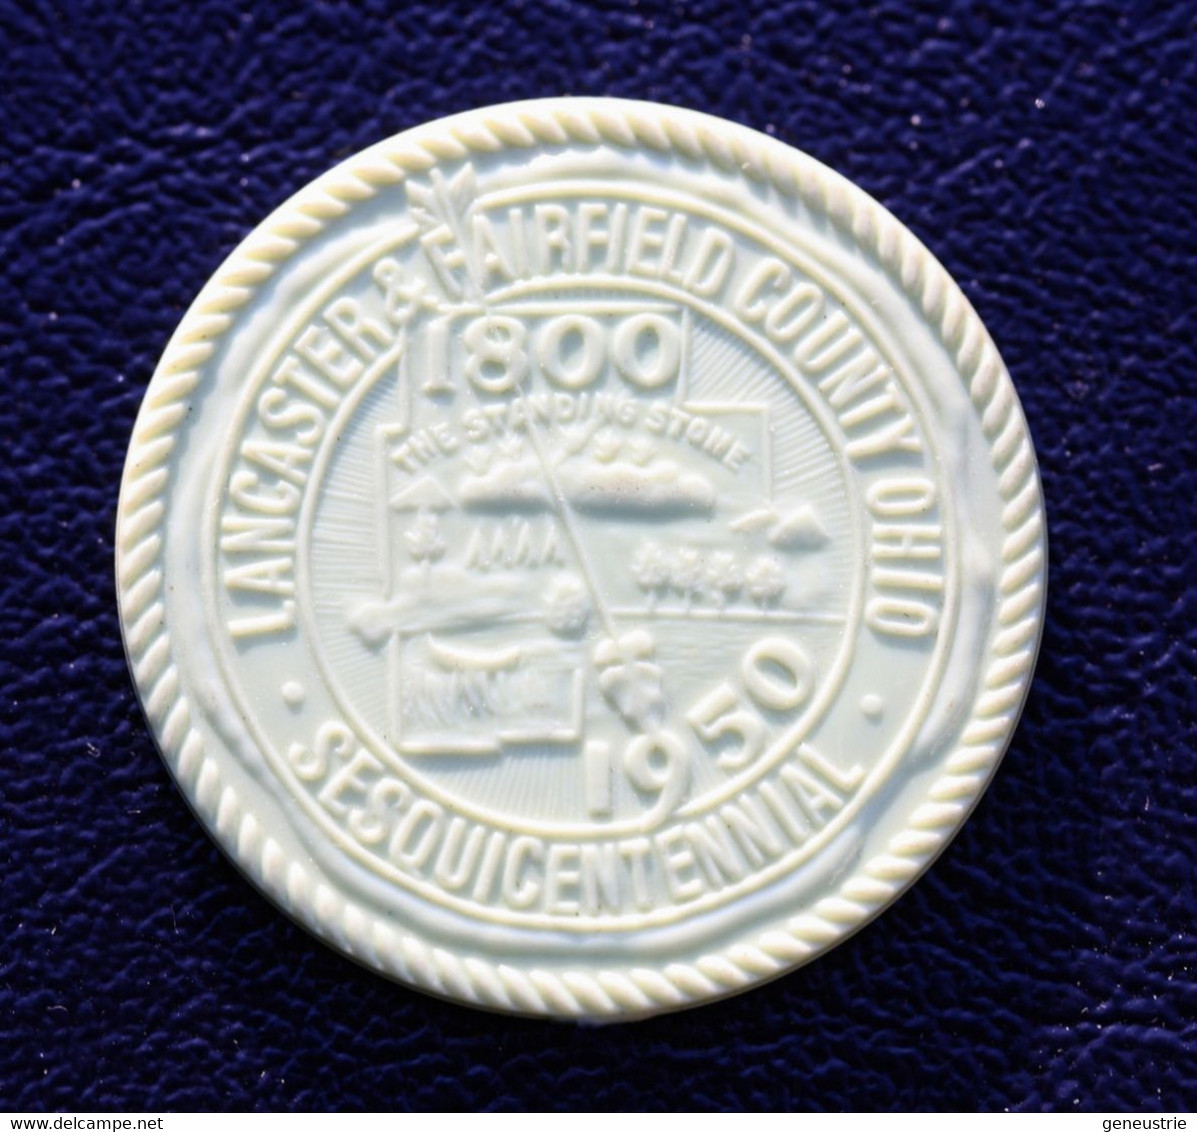 Beau Jeton De Nécessité 1800-1950 "10 Cent - Sesqui-centenal Souvenir Token - Lancaster & Fairfield County Ohio - USA - Monetary/Of Necessity